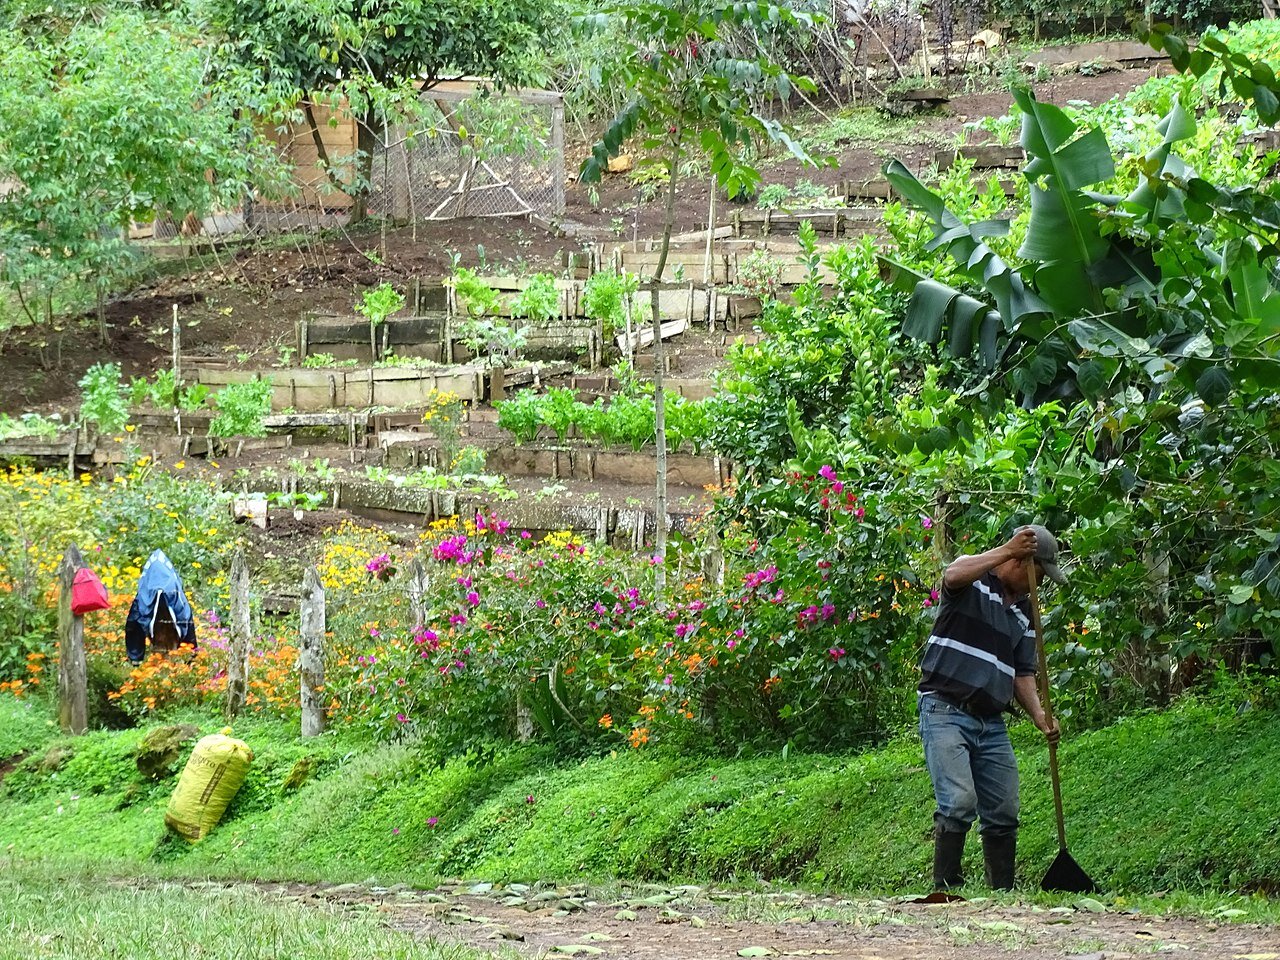 Property for Sale Nicaragua Sustainable Award Winning Eco Lodge With Coffee Farm 4.jpg